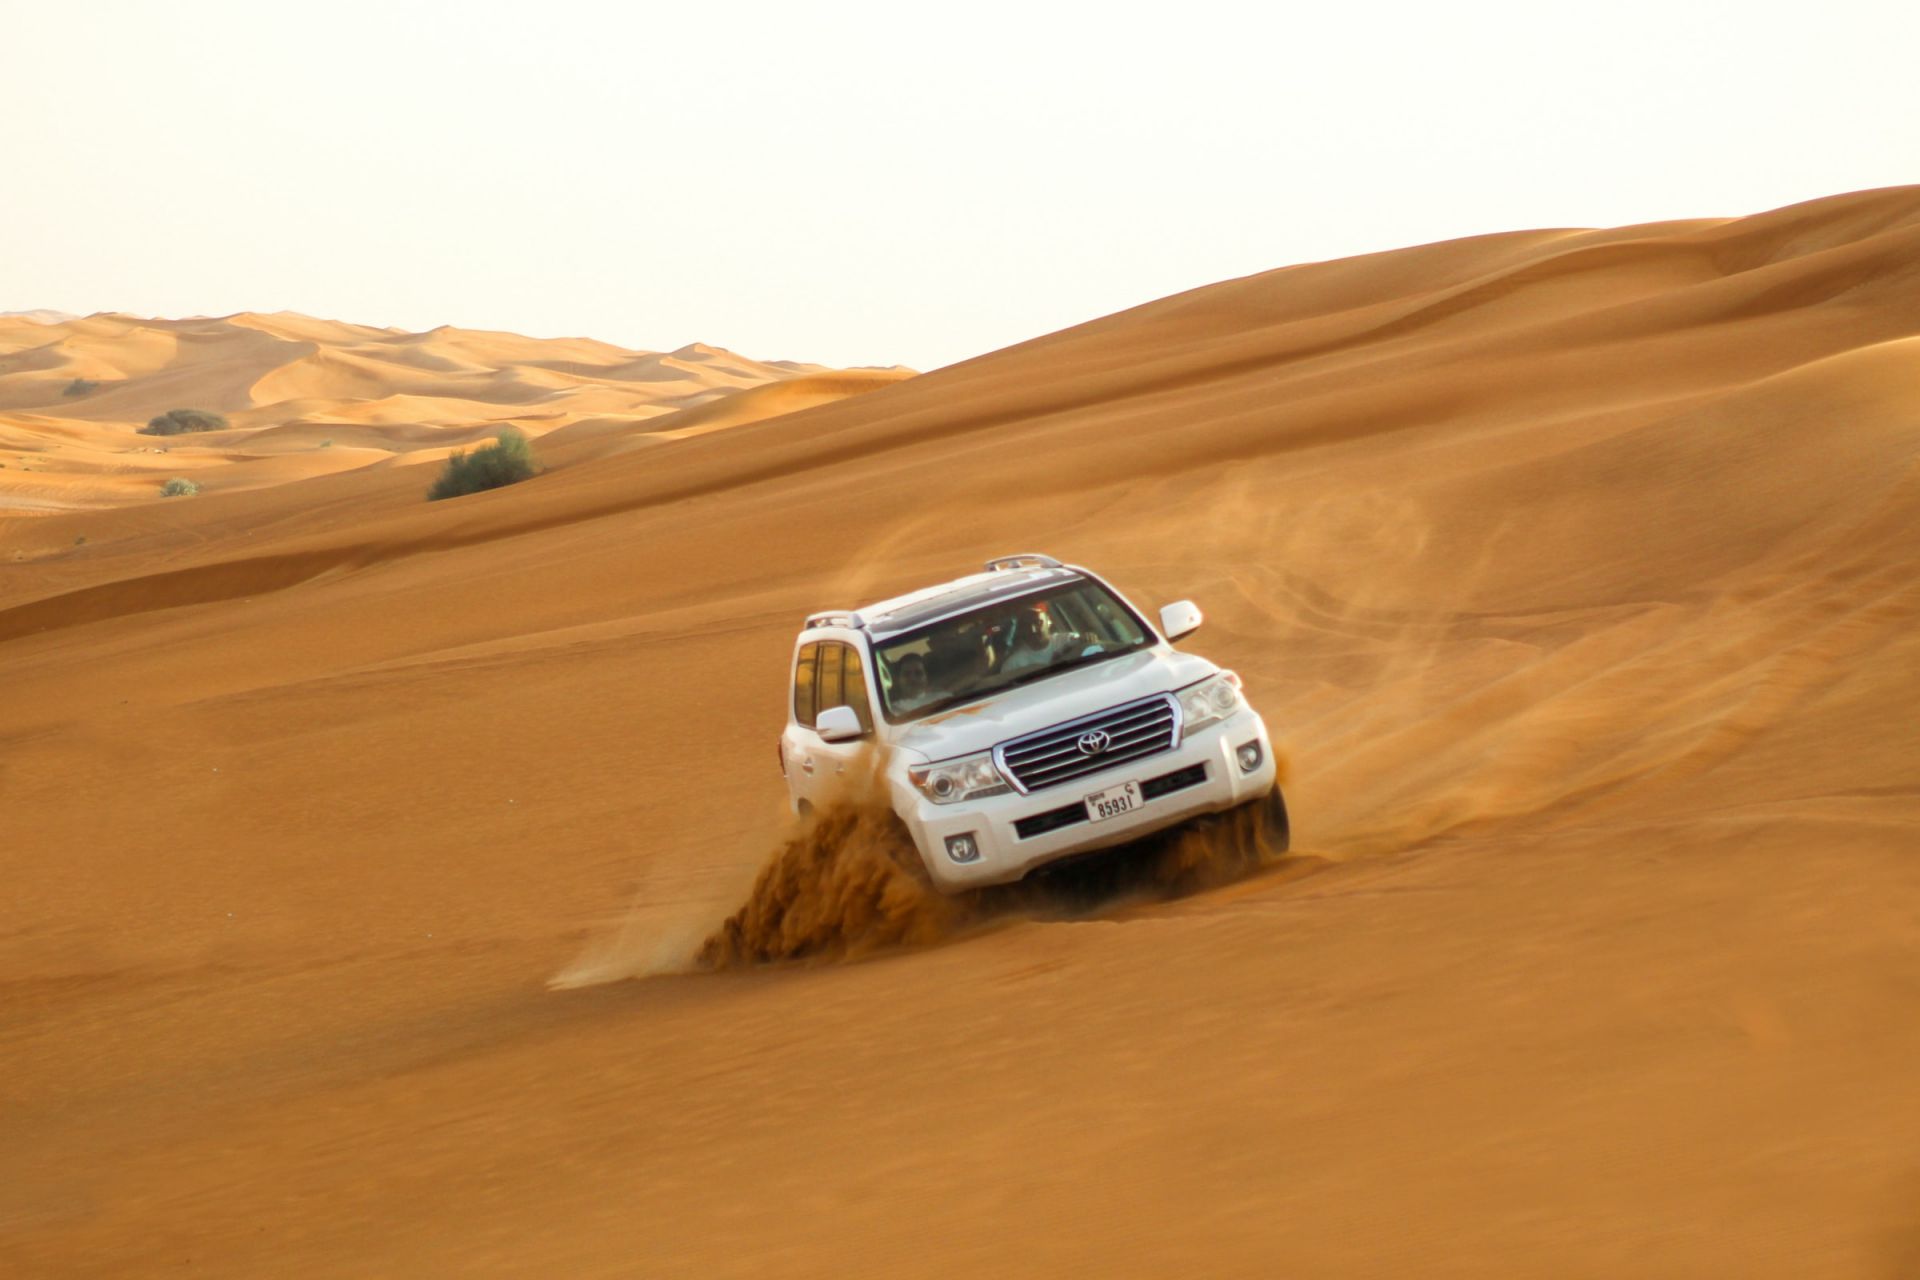 Toyota Landcruiser drifting on a sand dune